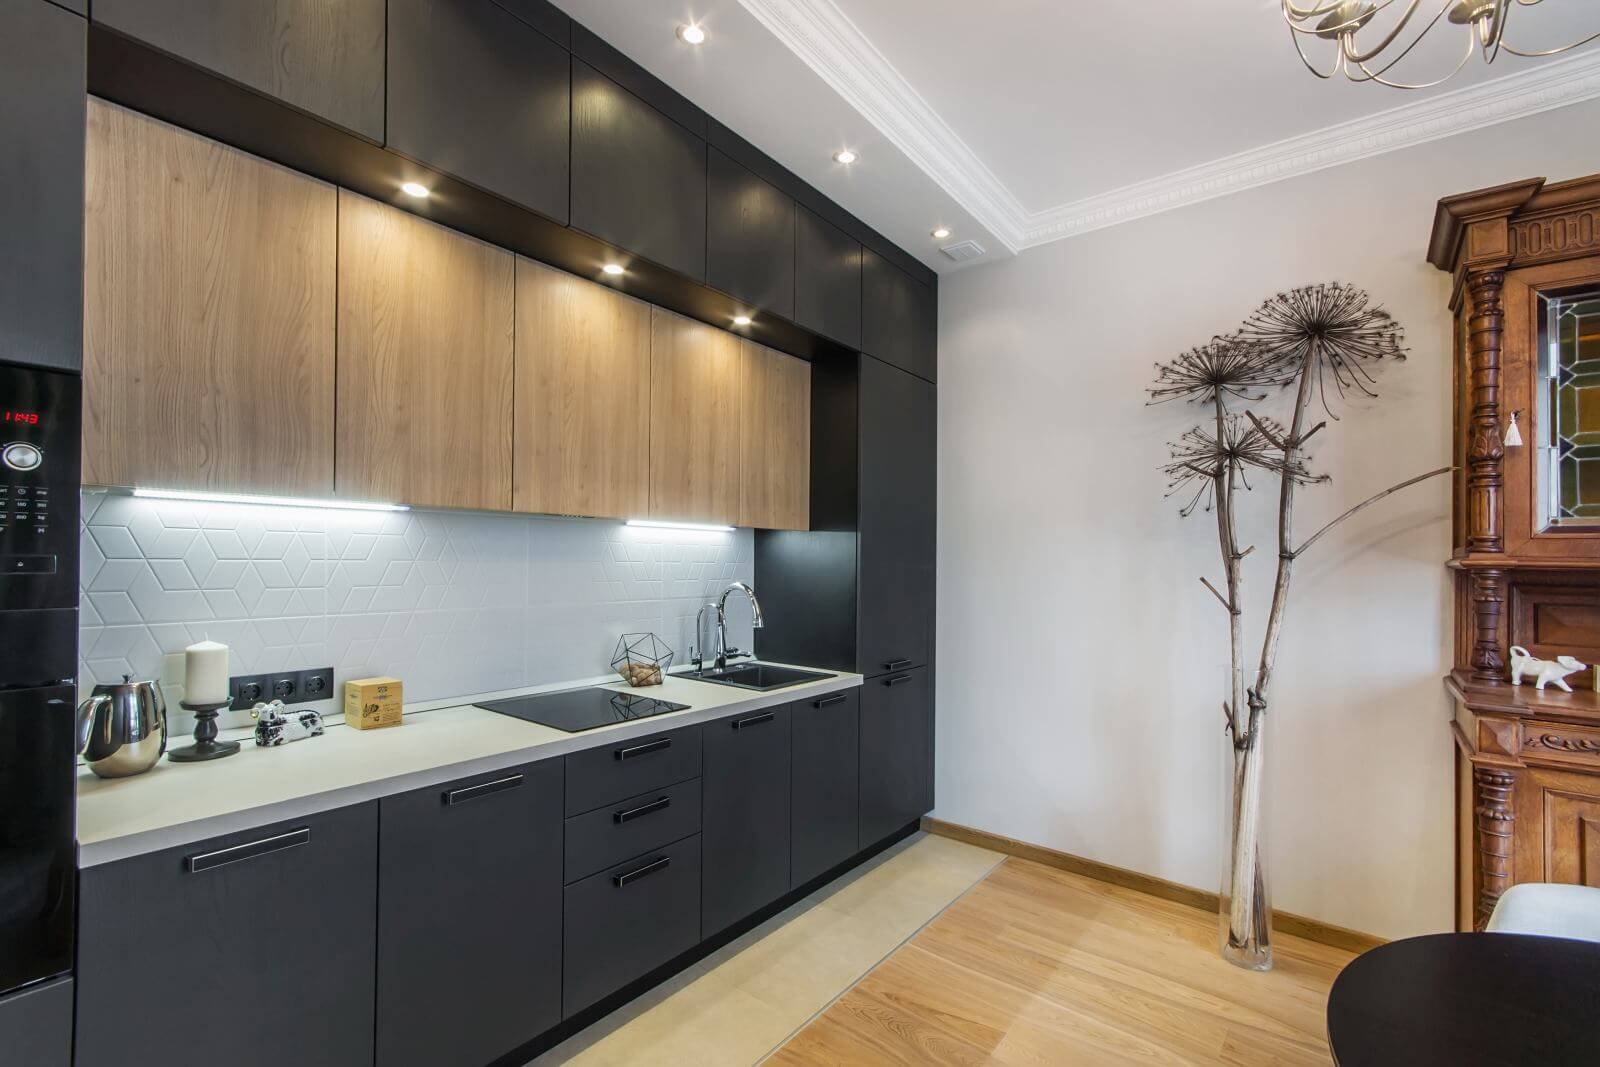 Stylish kitchen interior with nice modern  furniture